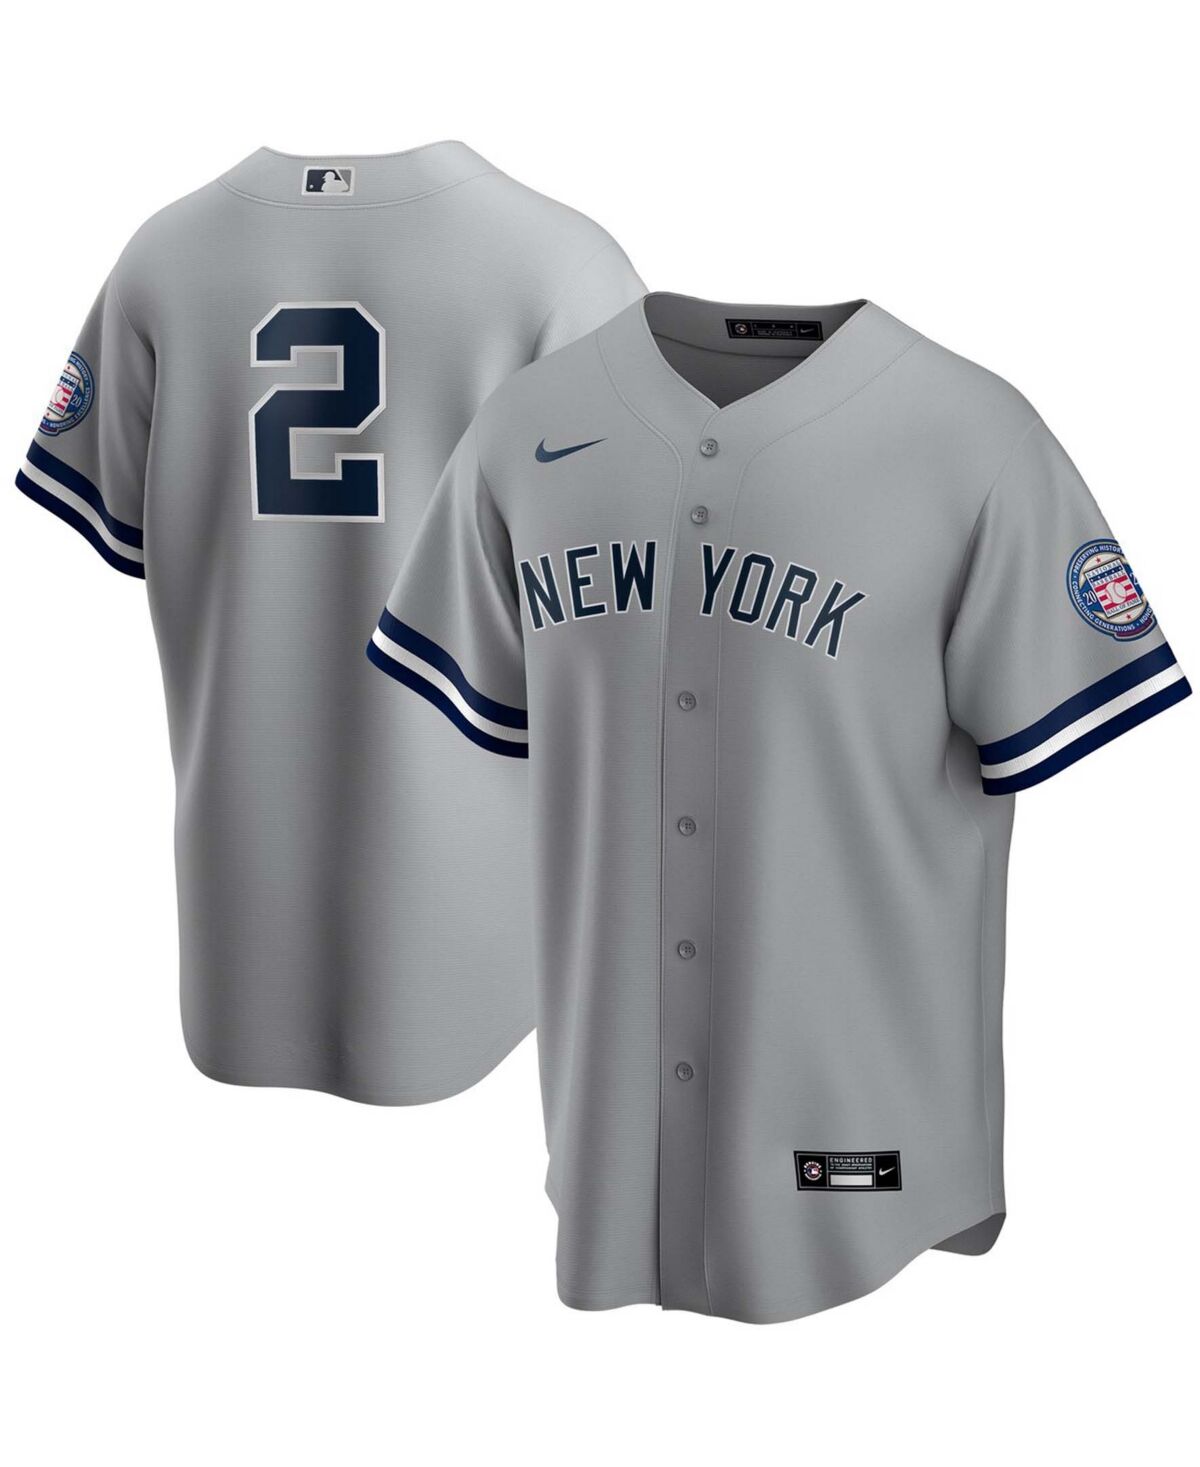 Nike Men's Derek Jeter Gray New York Yankees 2020 Hall of Fame Induction Replica Jersey - Gray